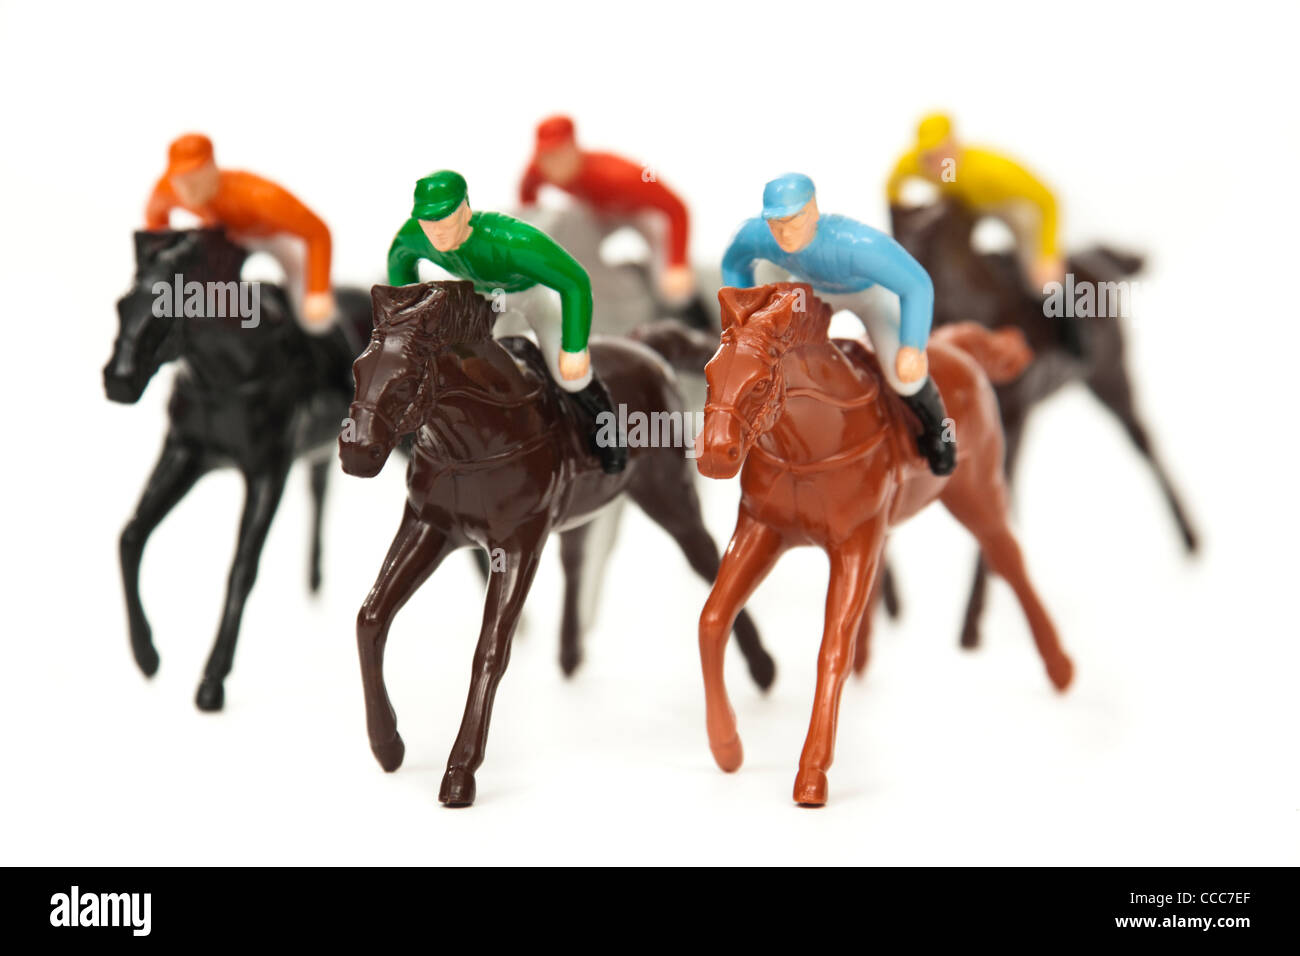 Escalado horse racing gioco di bordo Foto Stock